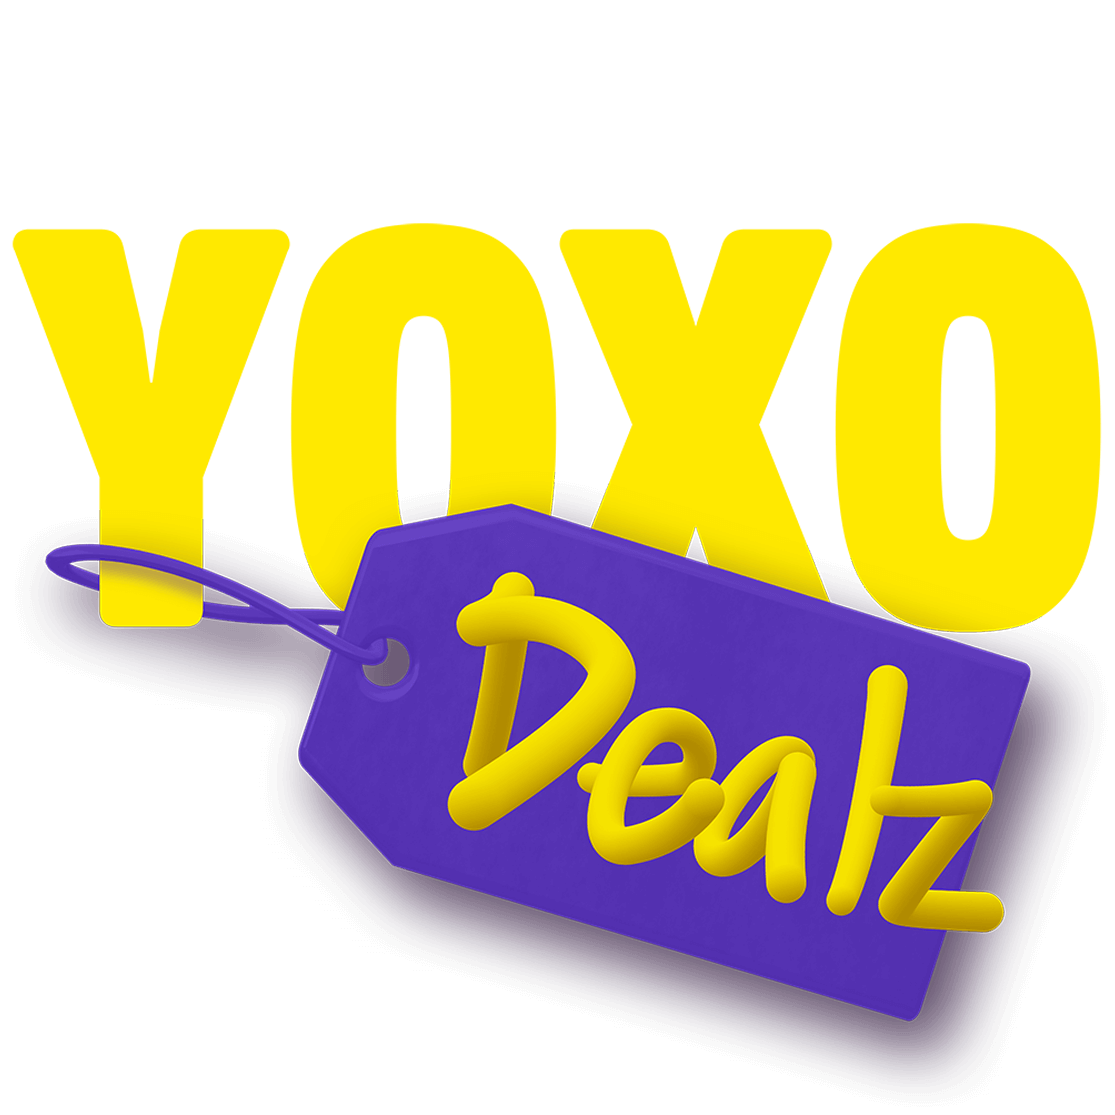 YOXO Dealz